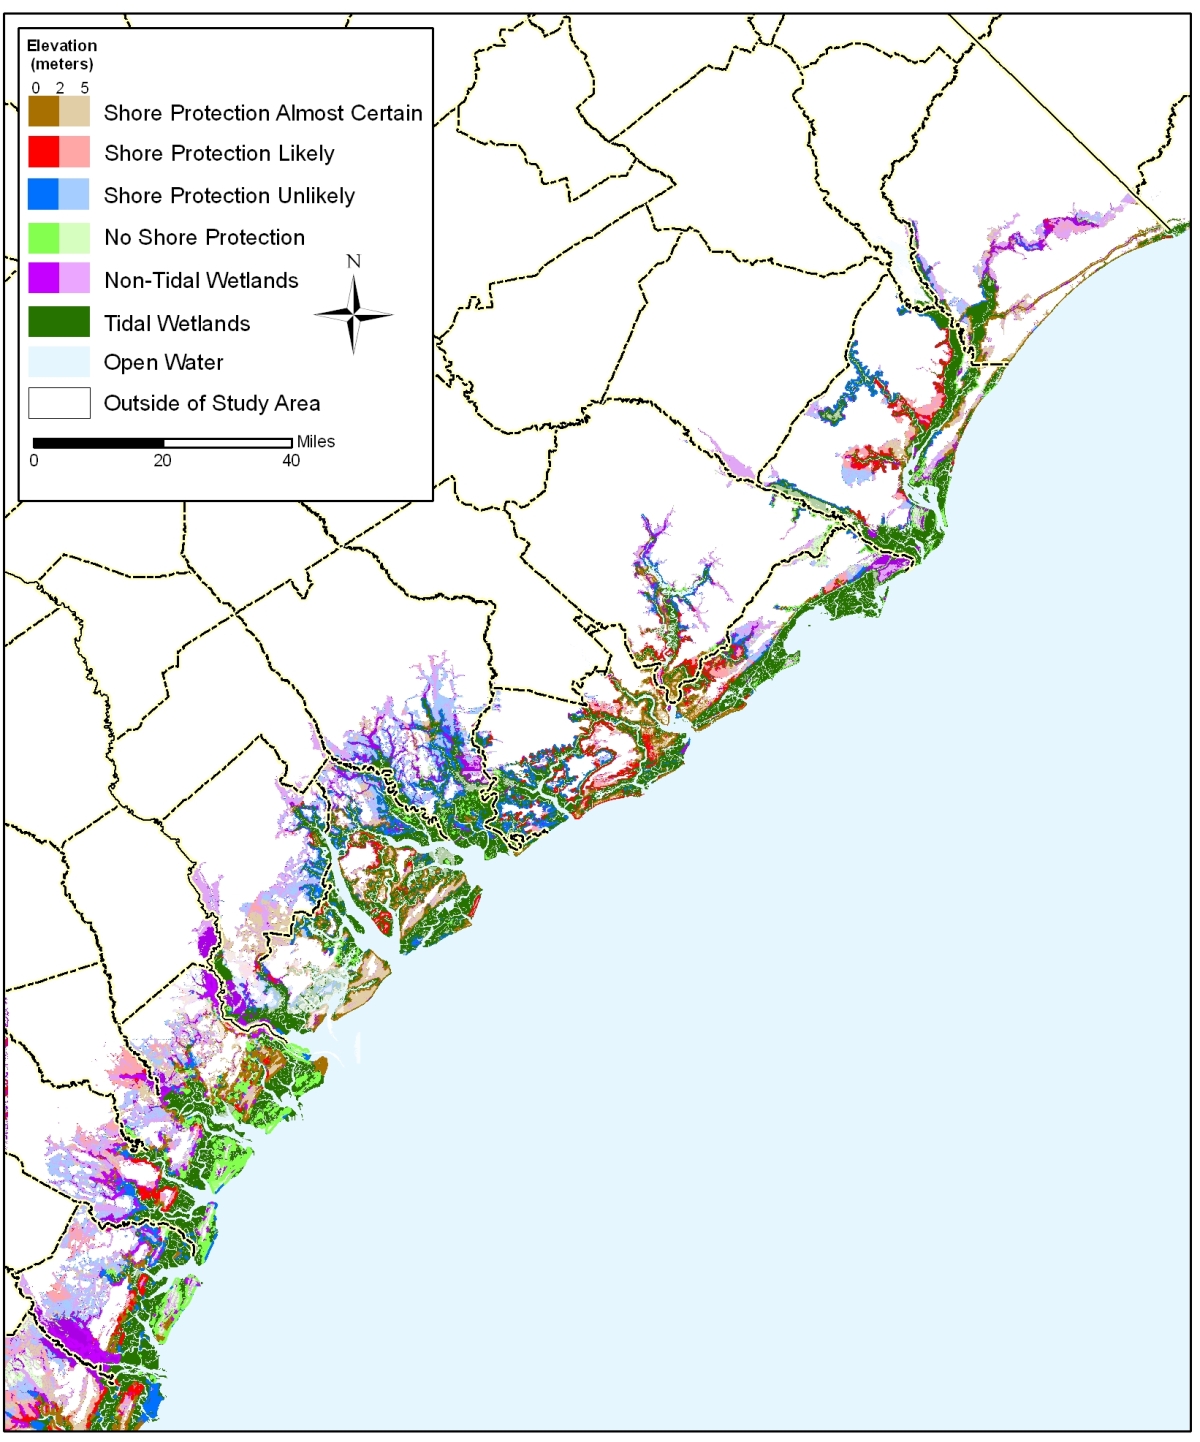 South Carolina sea level rise planning map